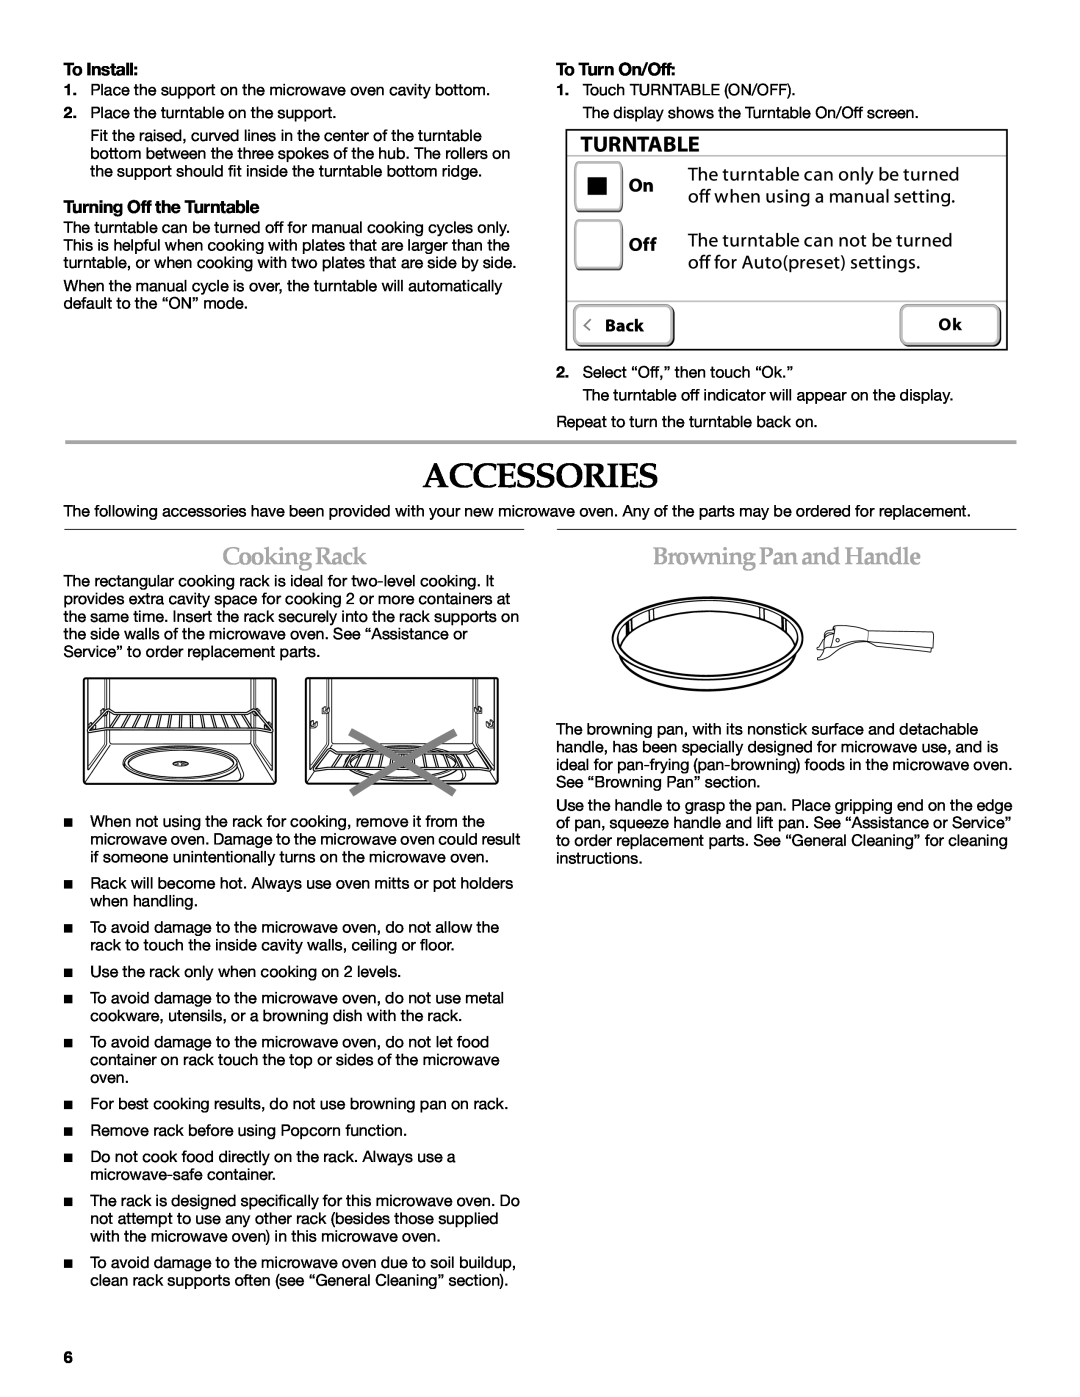 KitchenAid KHMS2056SBL manual Accessories, CookingRackBrowningPanandHandle 